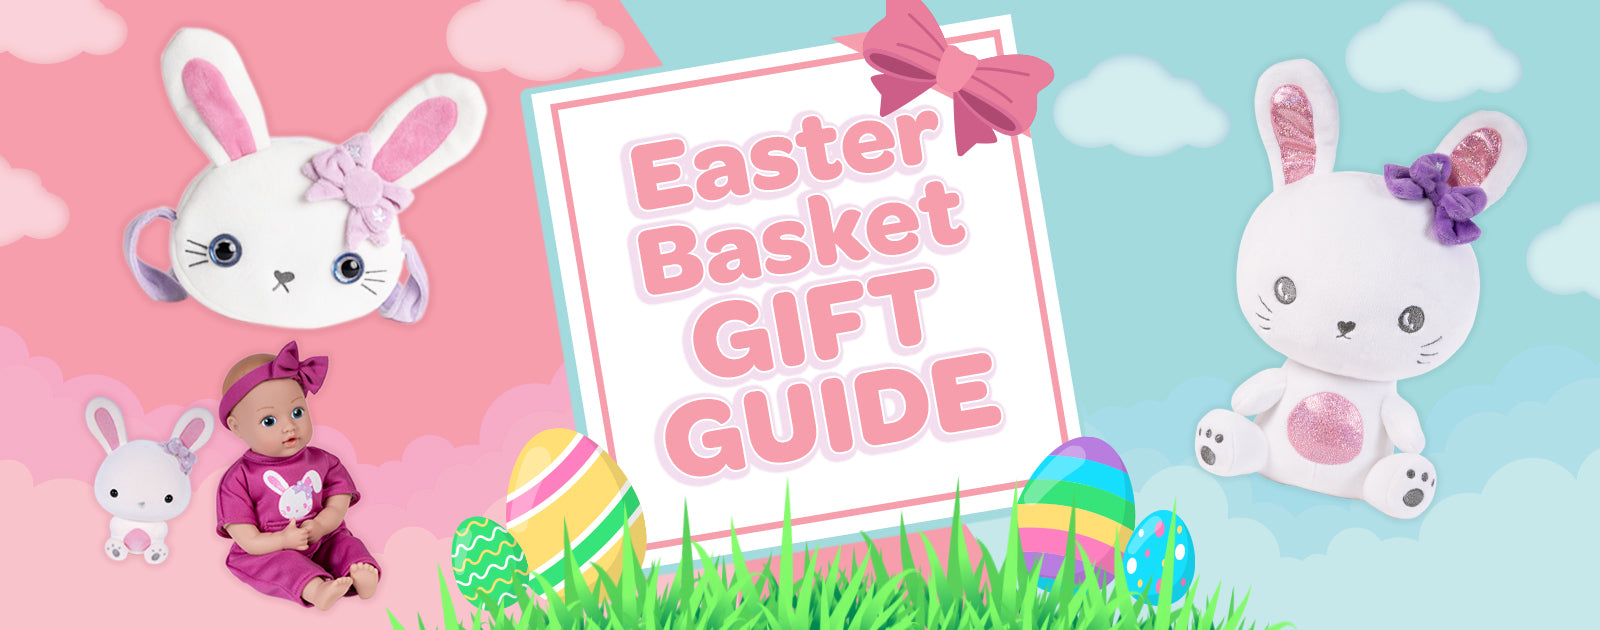 Easter Basket Bundle_gift Guide_1600x630_v3.jpg__PID:d224c73b-7270-4f74-b7e6-db65d35b3540